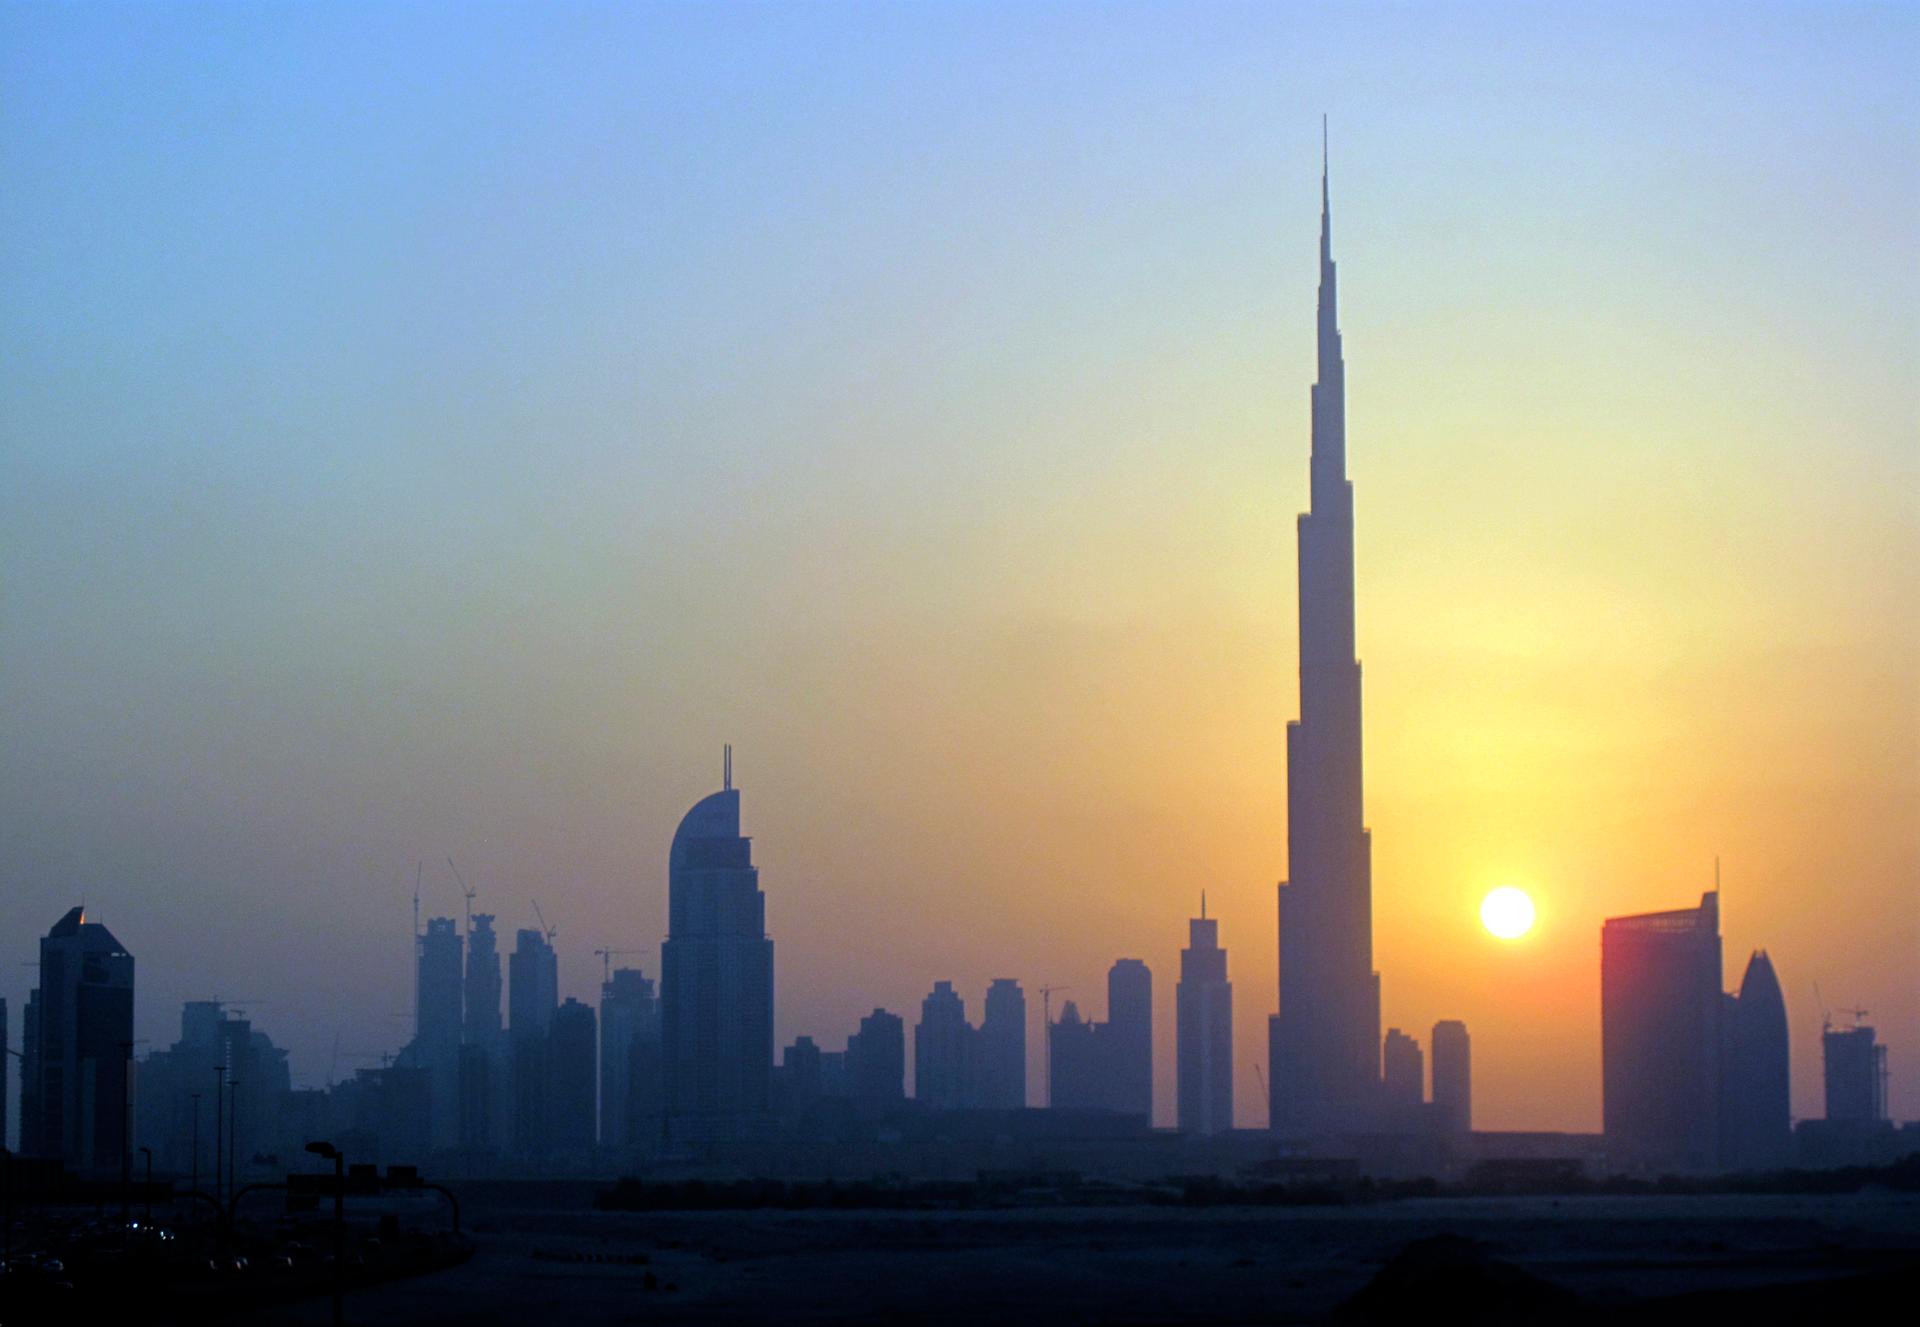 The Burj Khalifa (C) skyscraper is seen as the sun sets over Dubai on Oct. 5, 2010.